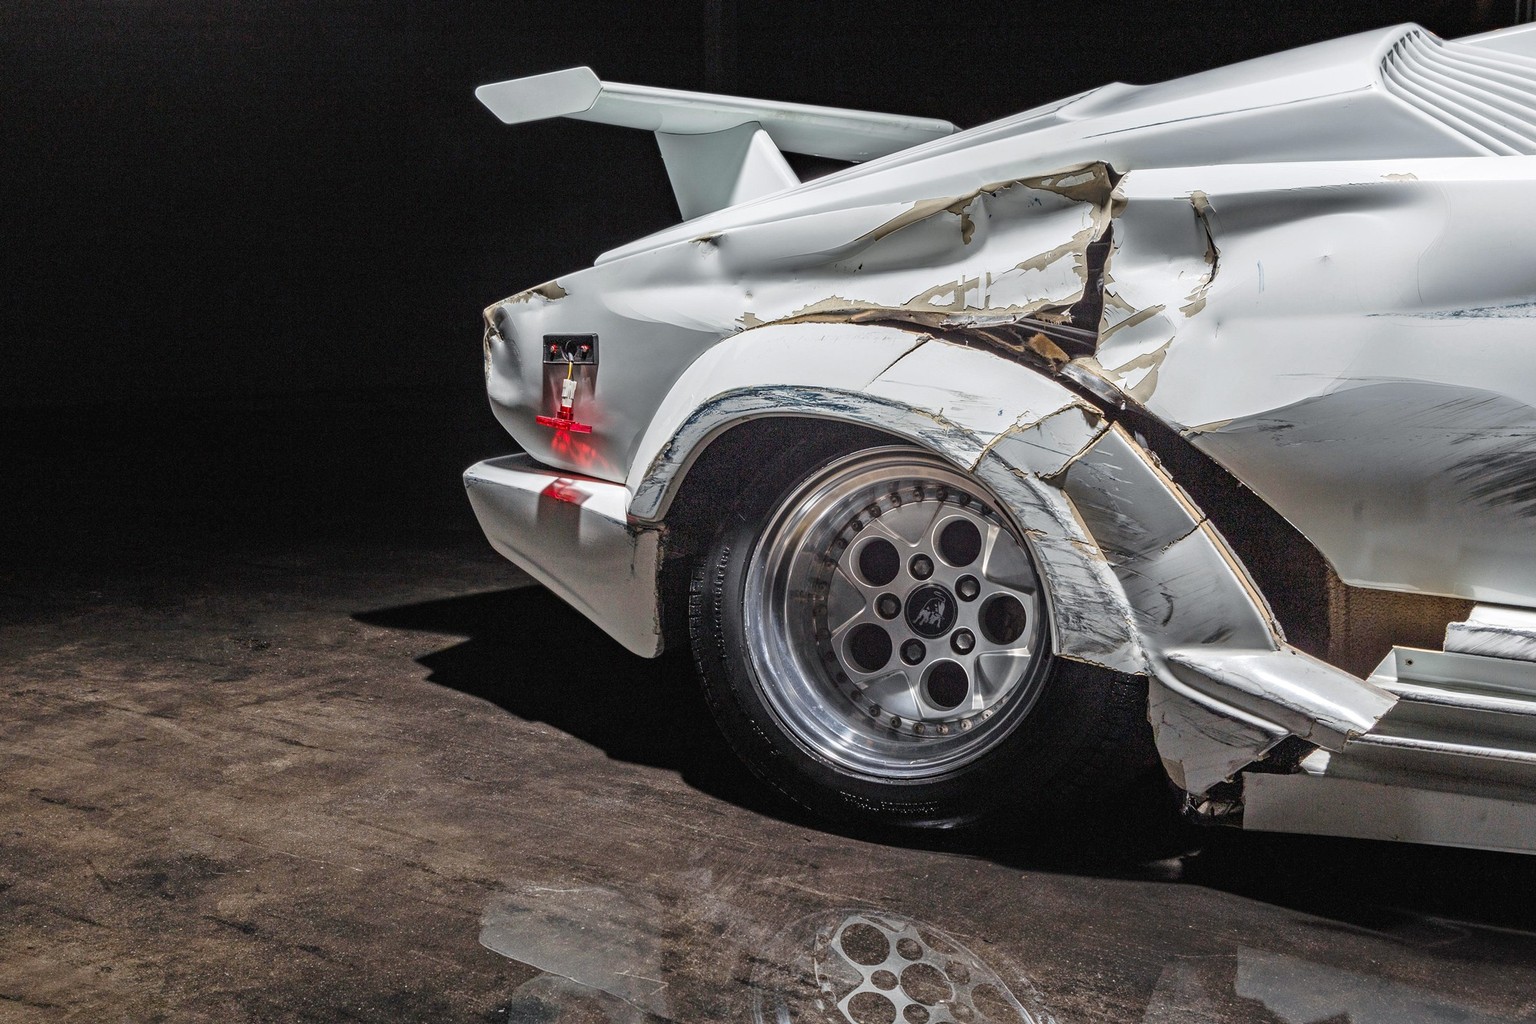 Wolf of Wall Street - Lamborghini Countach 25th Anniversary Edition 1989 - Martin Scorsese Leonardo DiCaprio Bonhams Auktion Versteigerung auto design https://cars.bonhams.com/auction/28793/lot/34P/19 ...